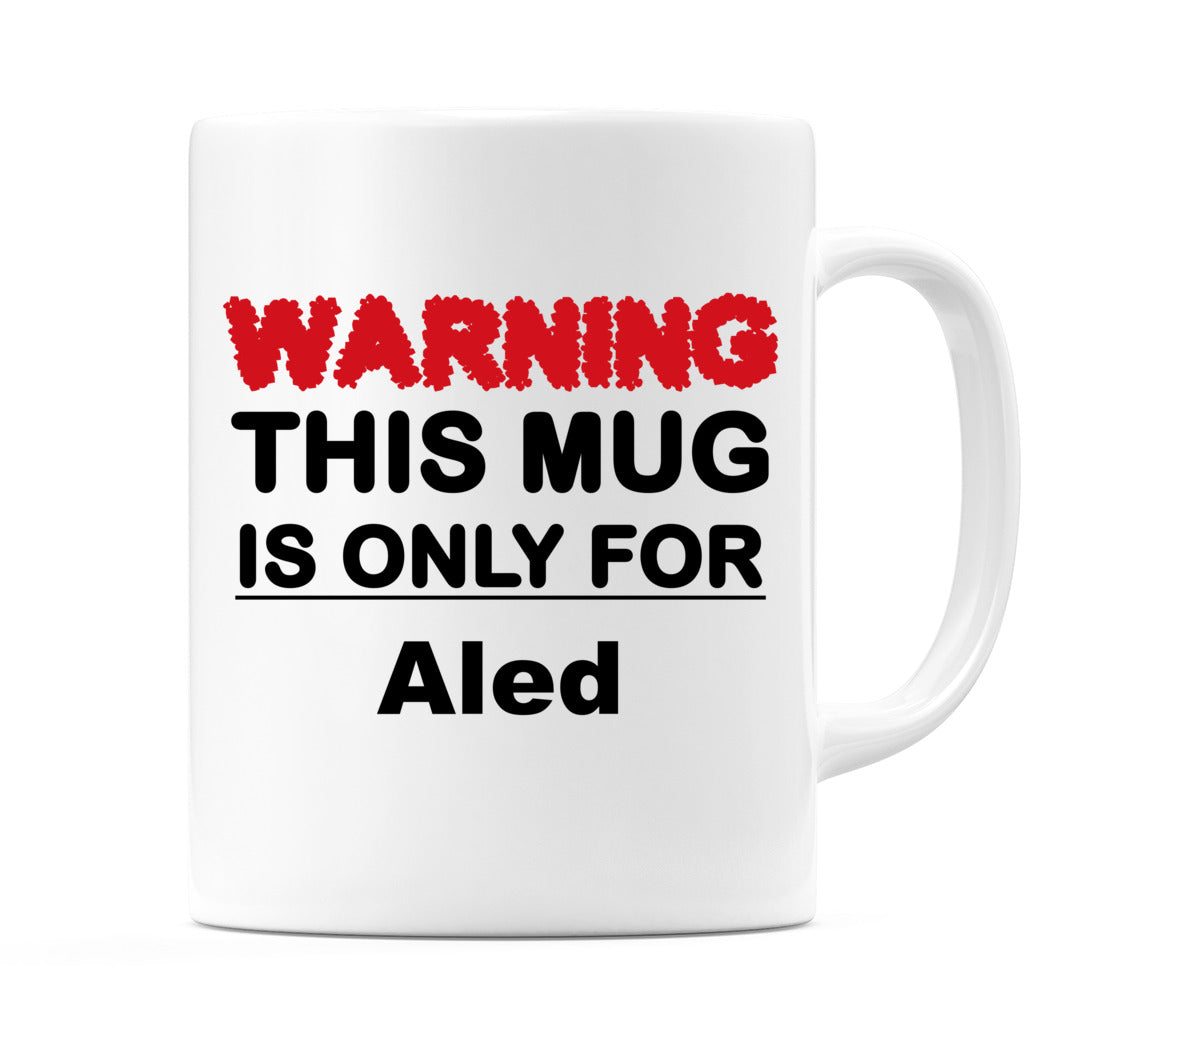 Warning This Mug is ONLY for Aled Mug